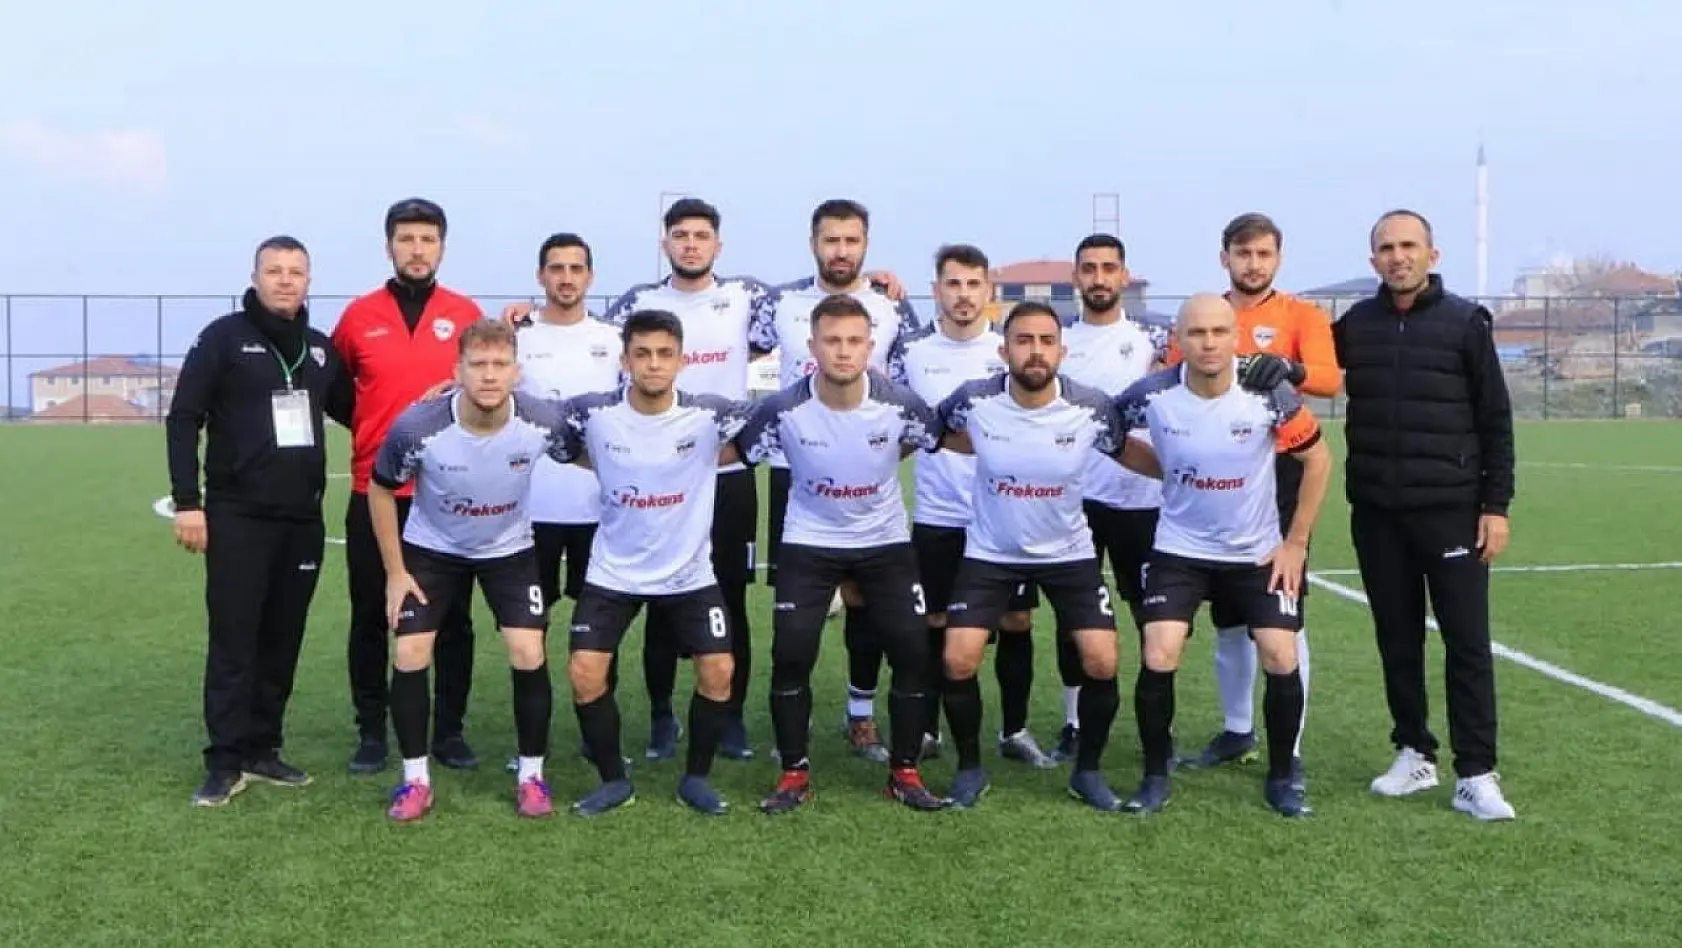 Başkan Kepenek, play off'u son maçta kaçıran Honazspor'a teşekkür etti